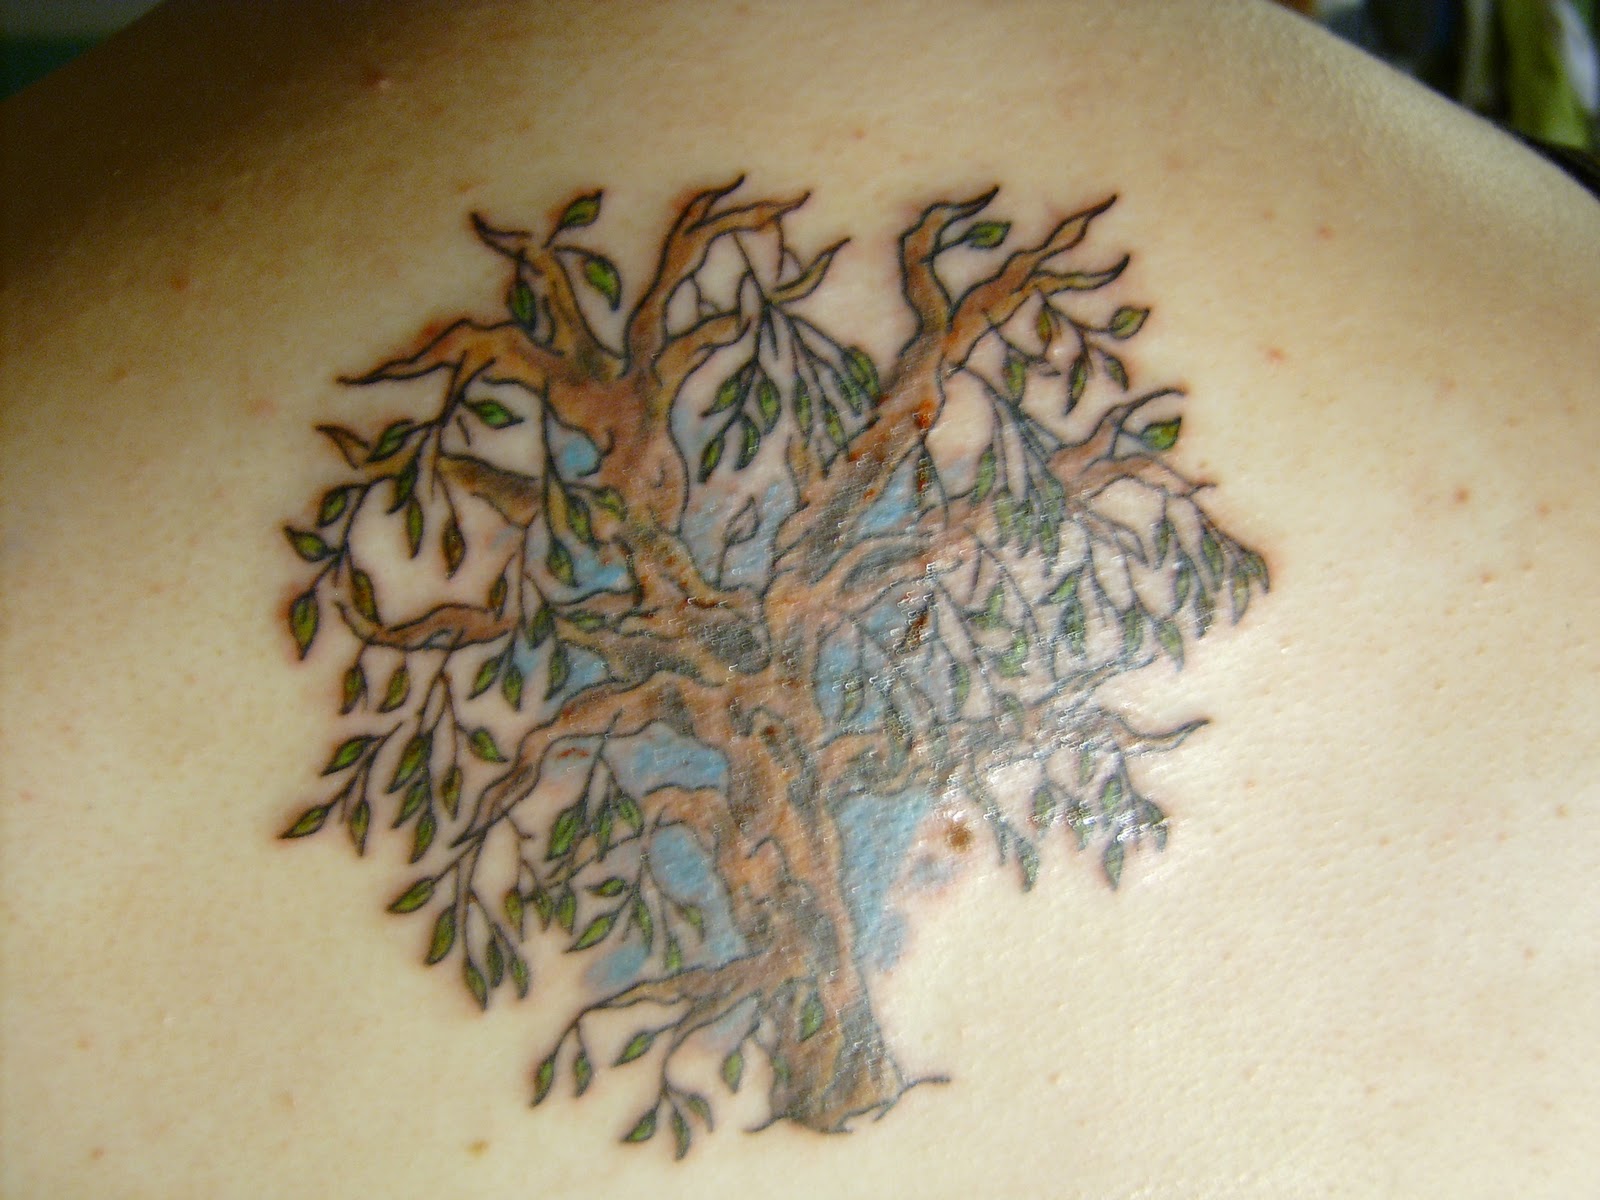 Grape Tattoos I even have a tattoo of a tree